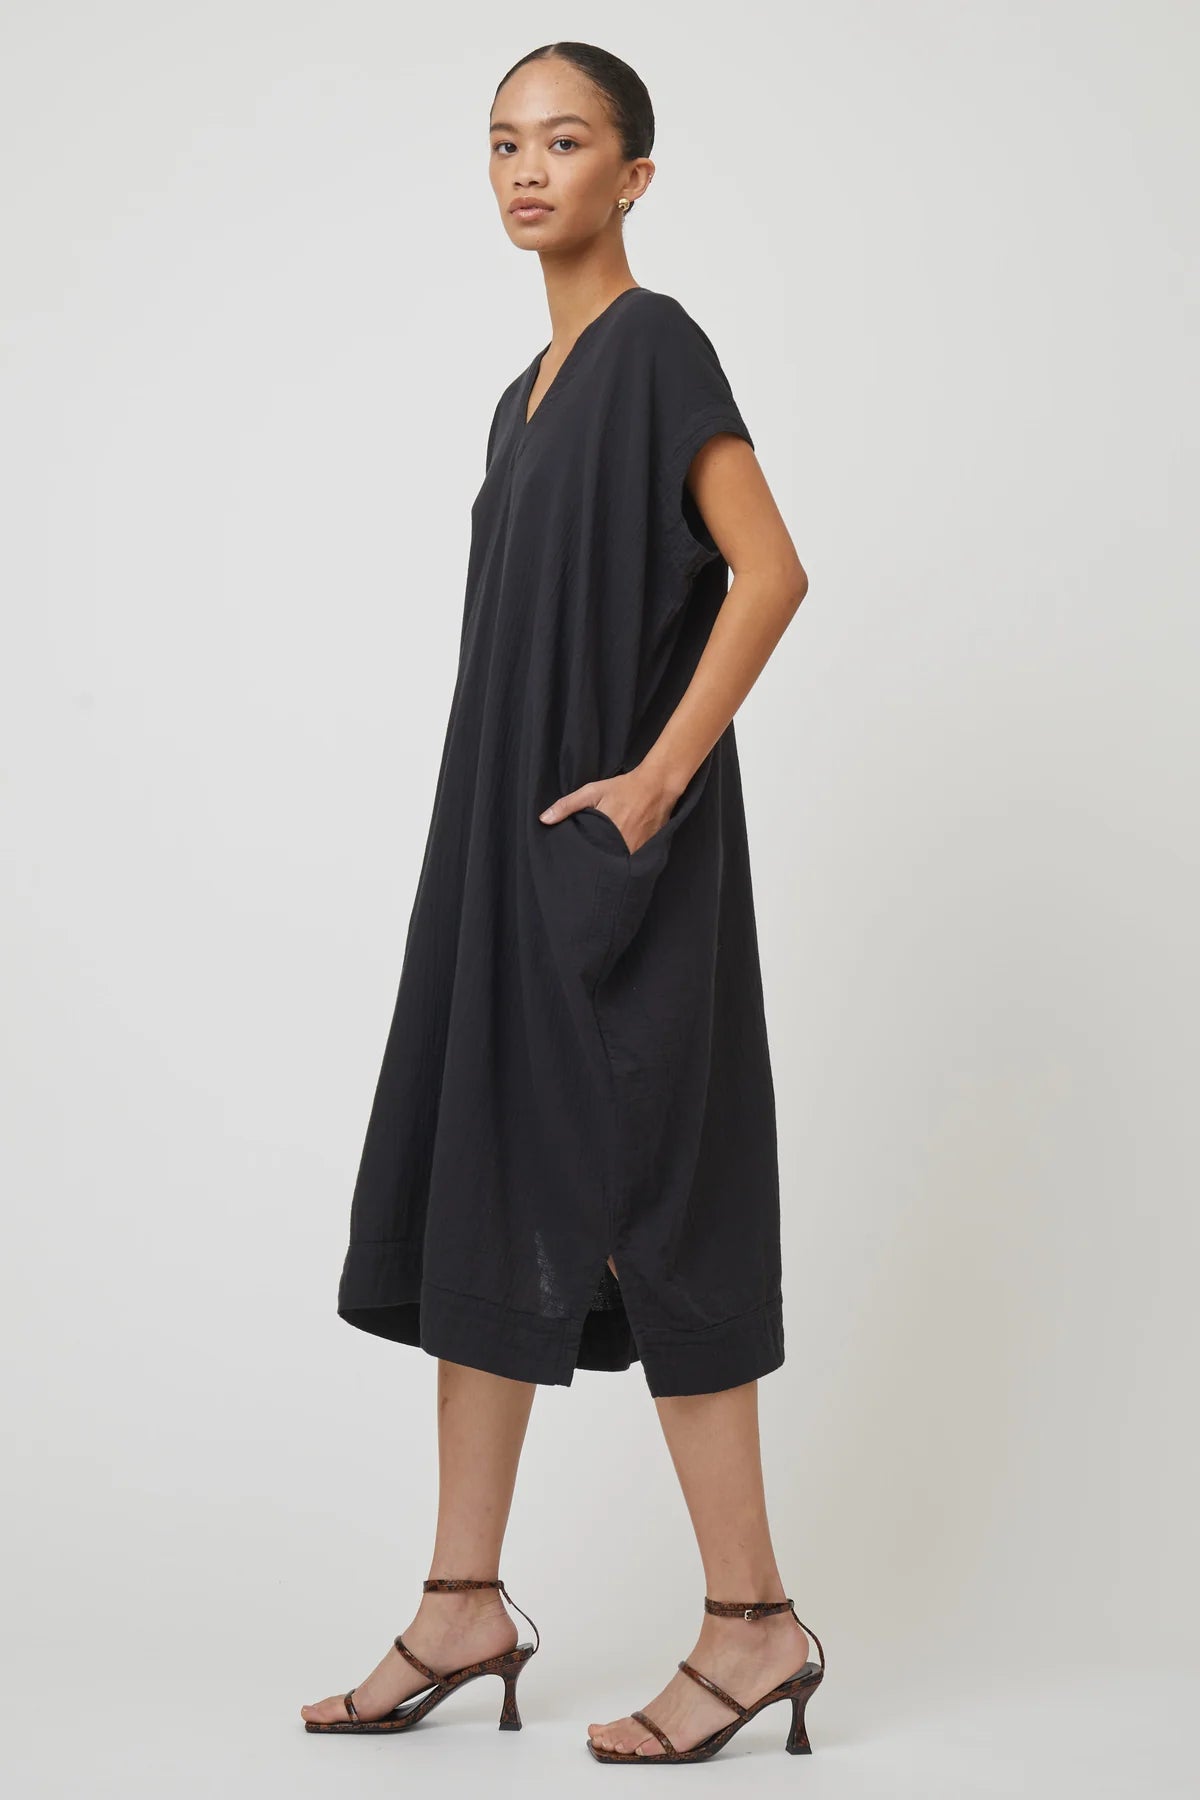 Atelier Delphine Crescent Long Dress in black